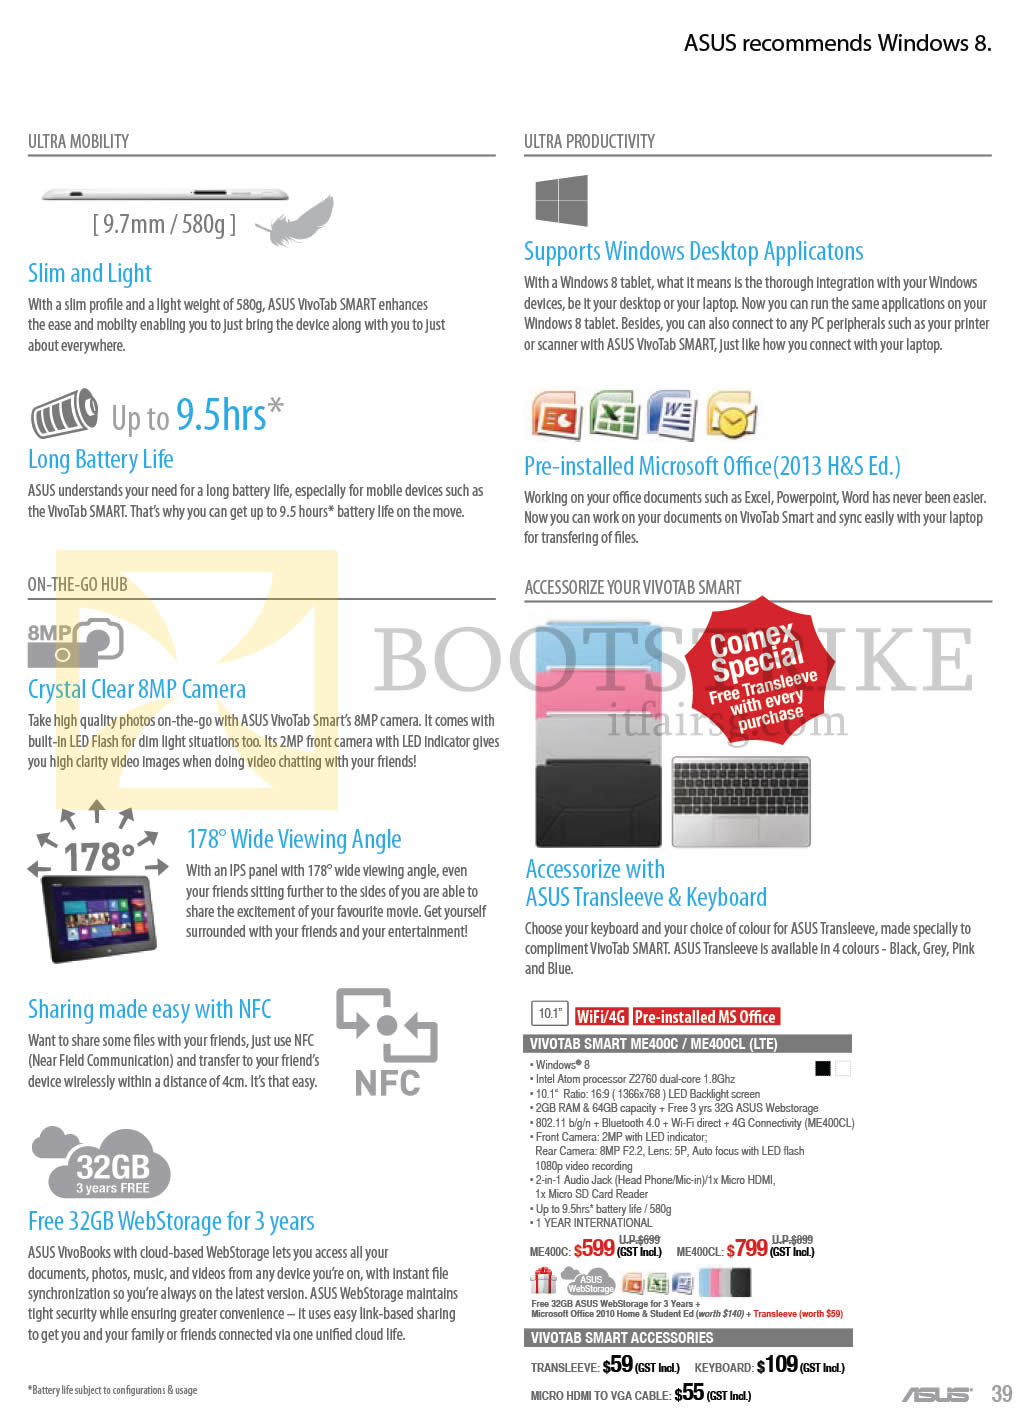 COMEX 2013 price list image brochure of ASUS Tablets VivoTab Smart, Features, ME400C, ME400CL, Accessories